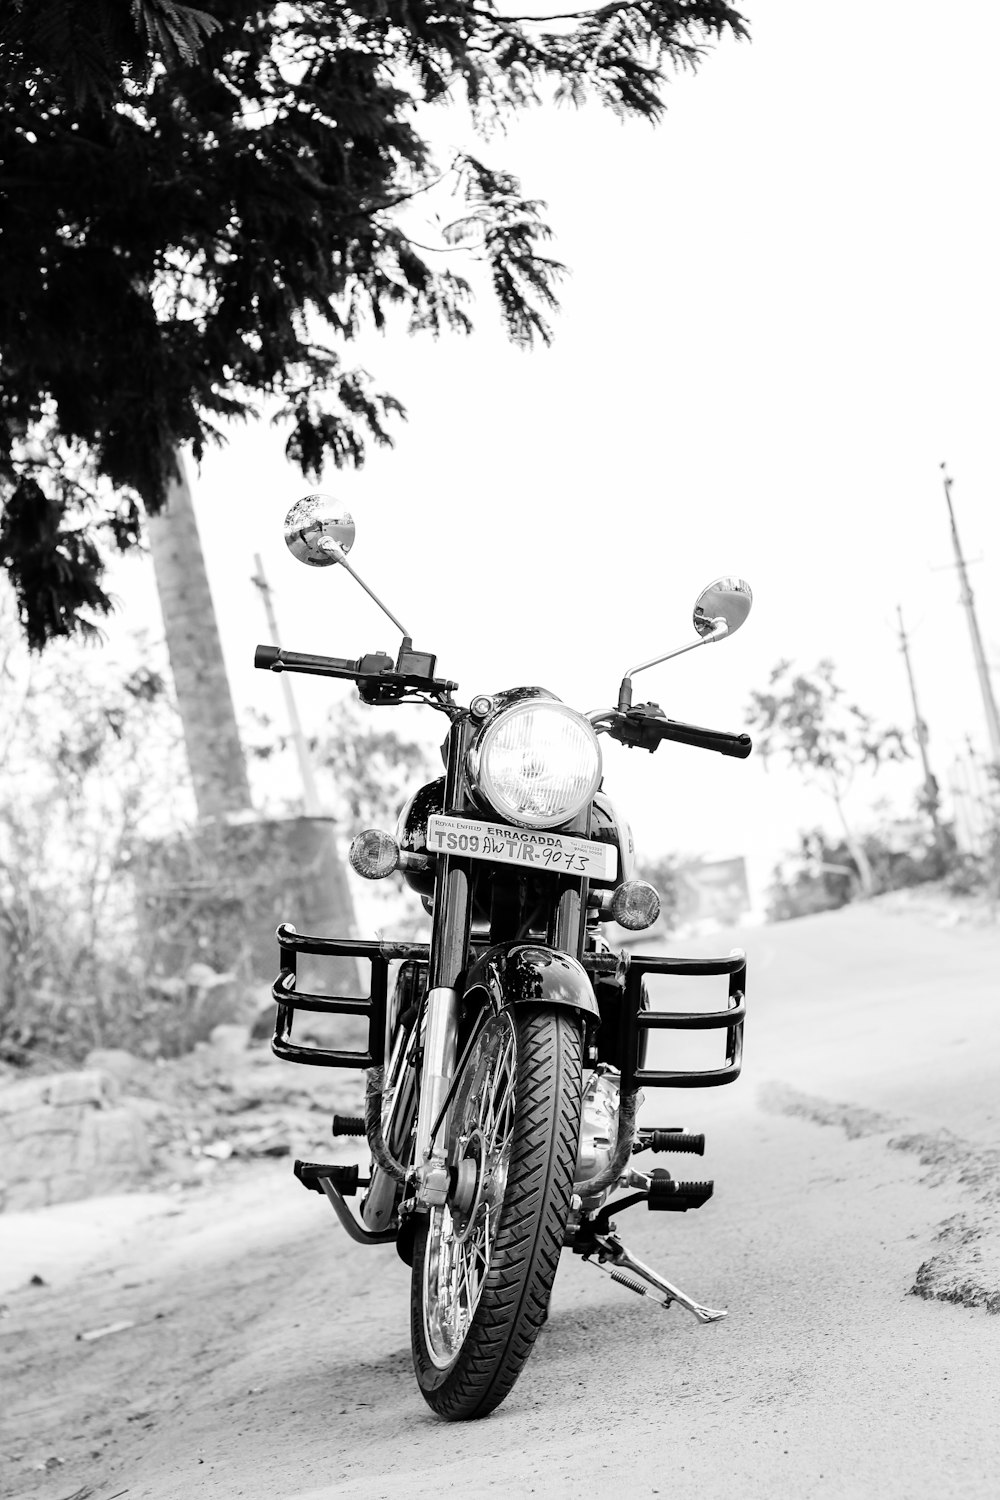 foto em tons de cinza da motocicleta estacionada na estrada